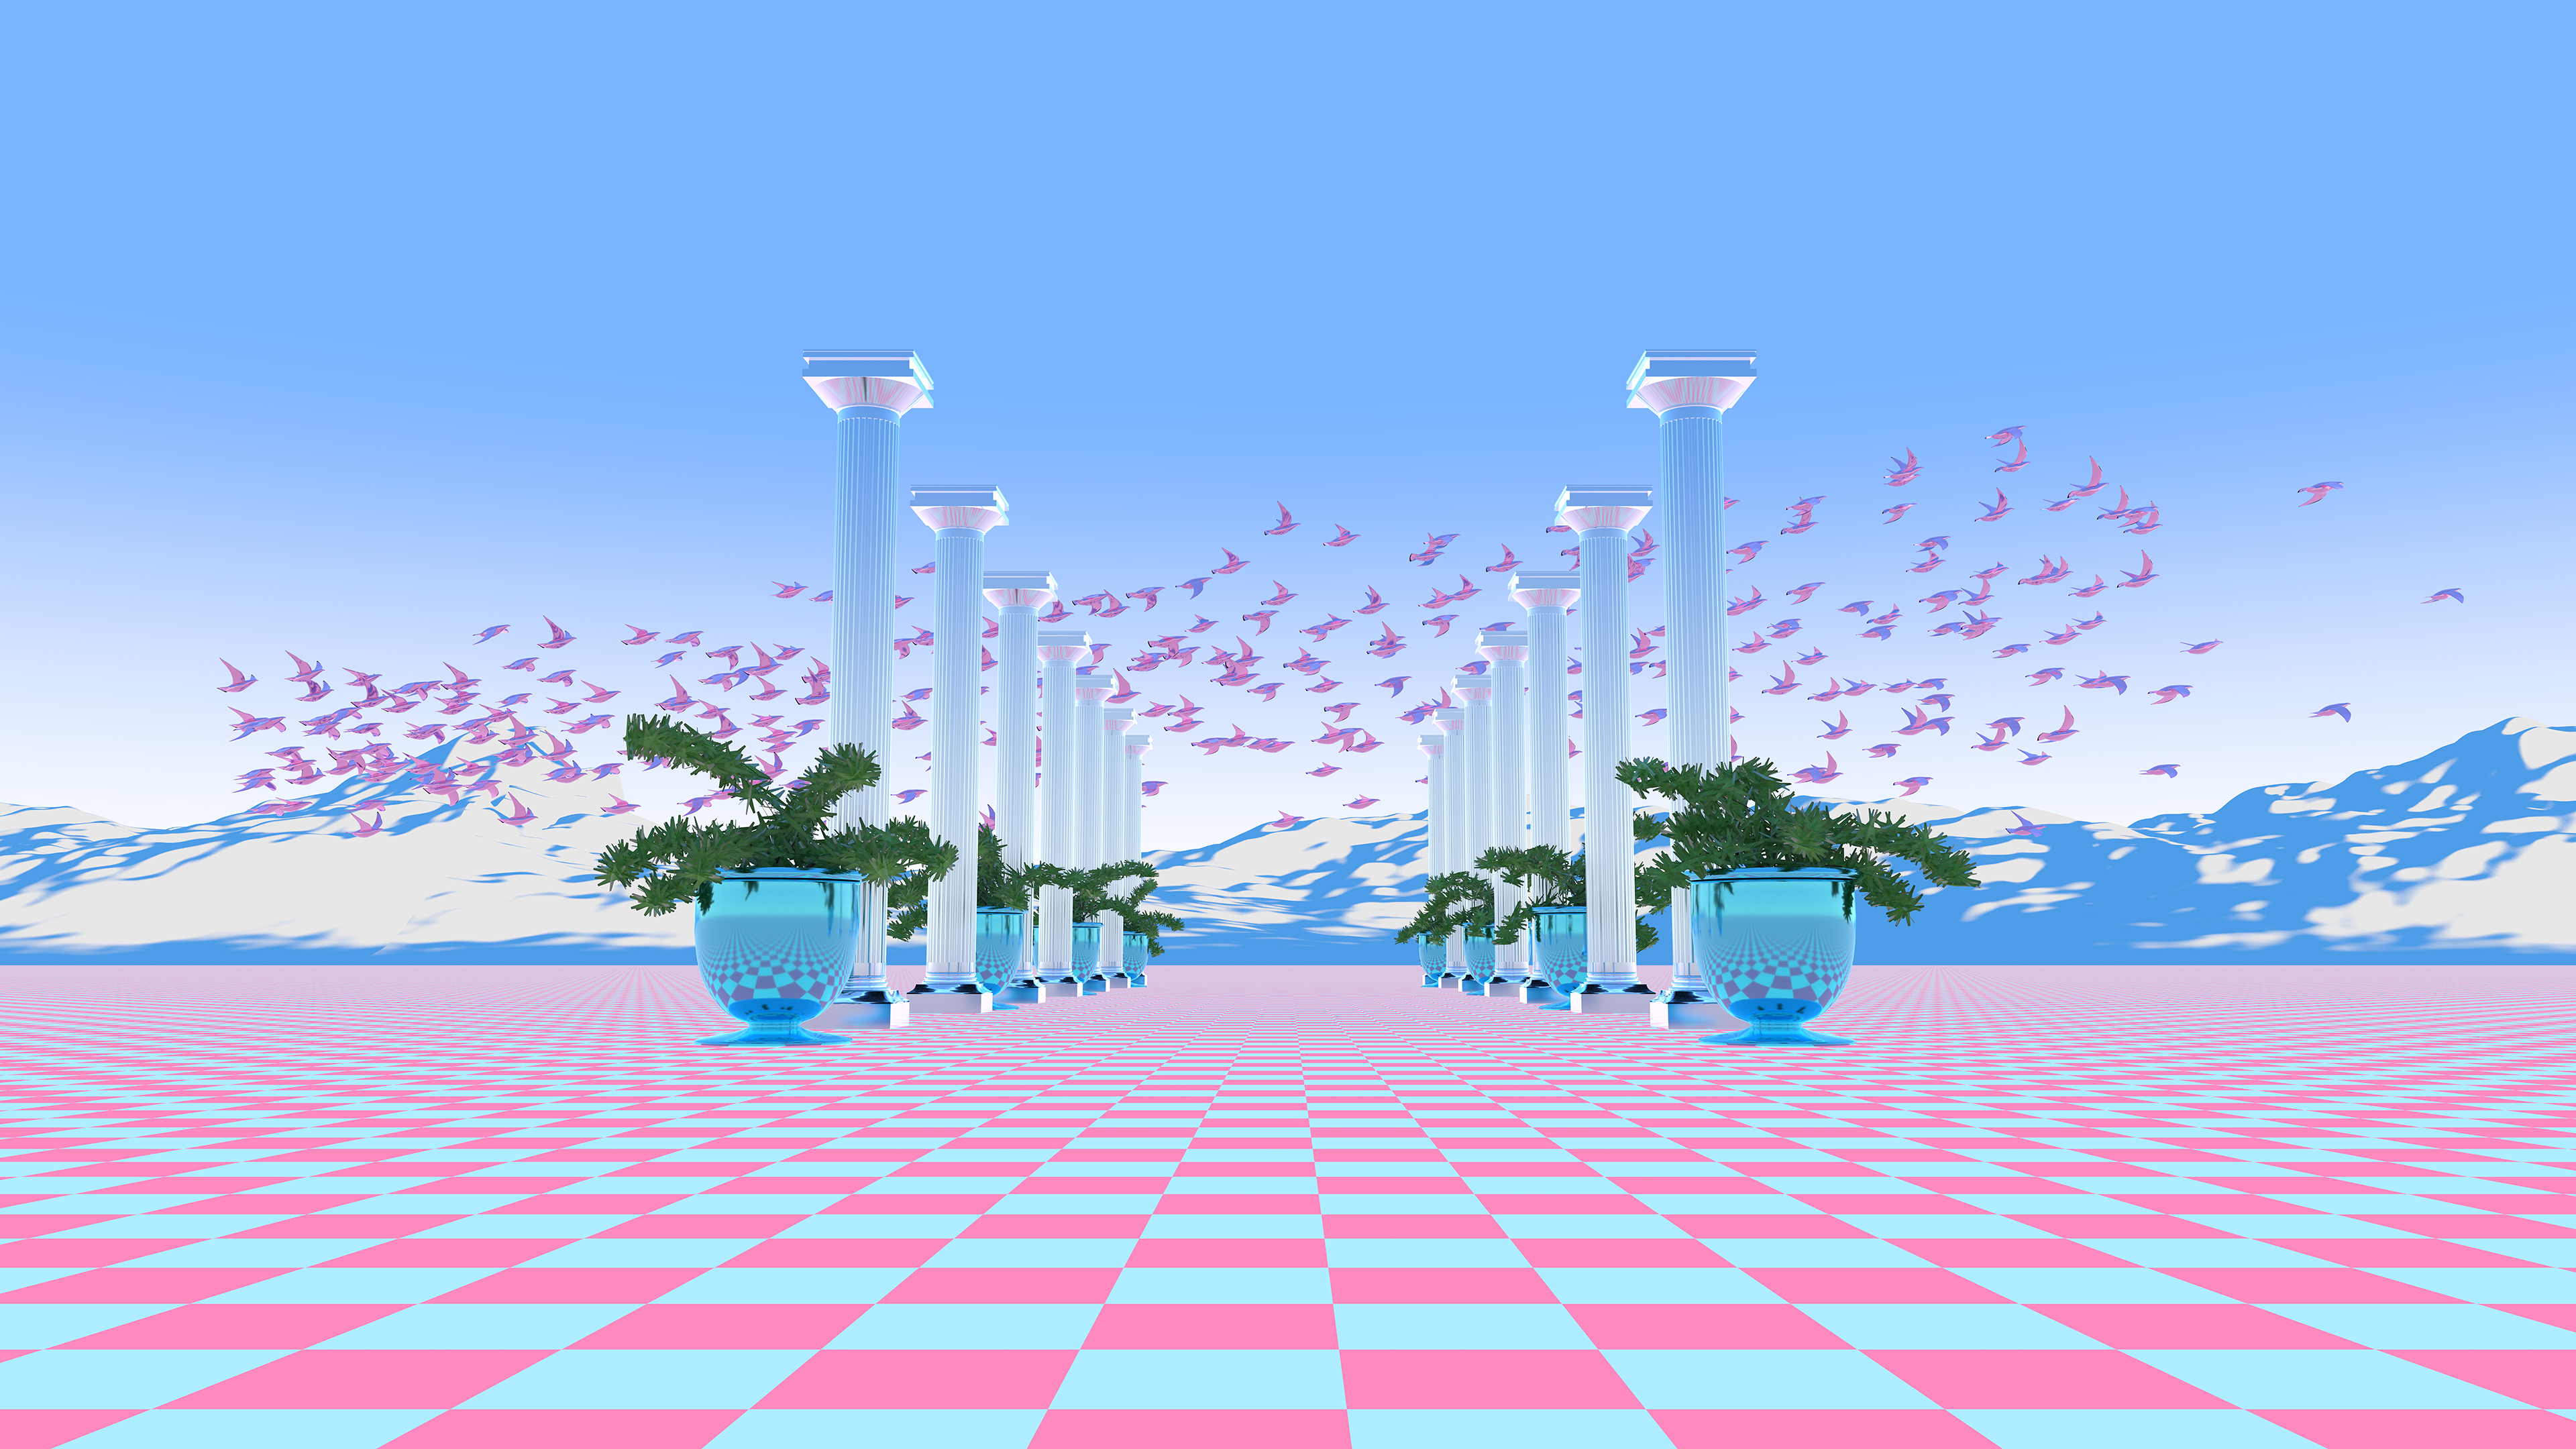 General 3840x2160 vaporwave digital art pillar vases pink blue flock of birds potted plant plants sky surreal turquoise checkered